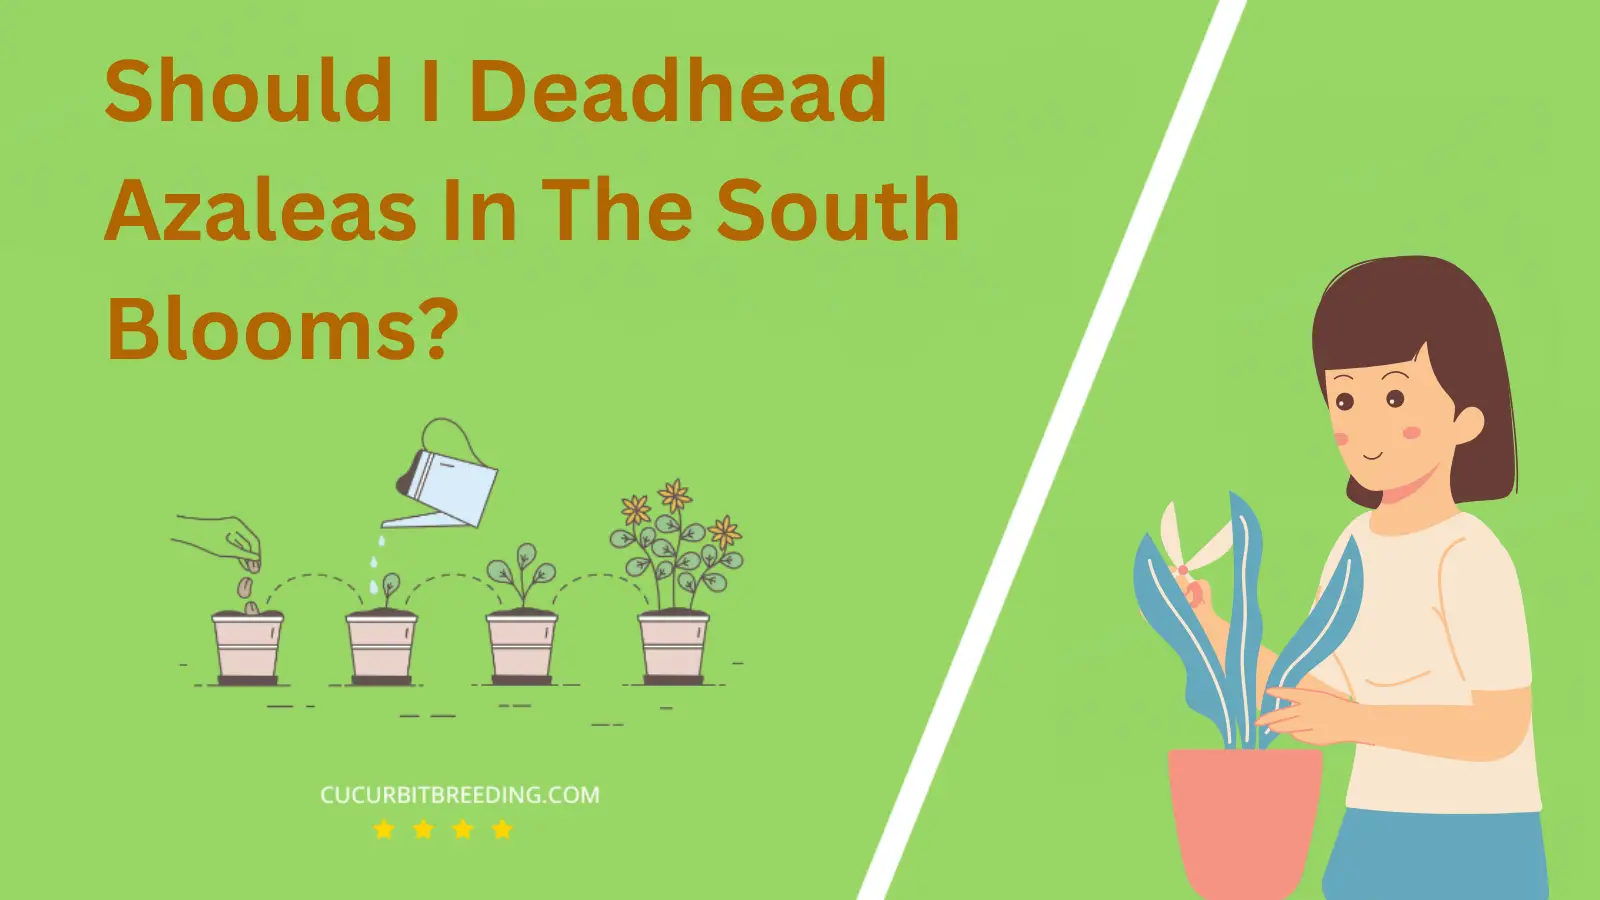 Should I Deadhead Azaleas In The South Blooms?